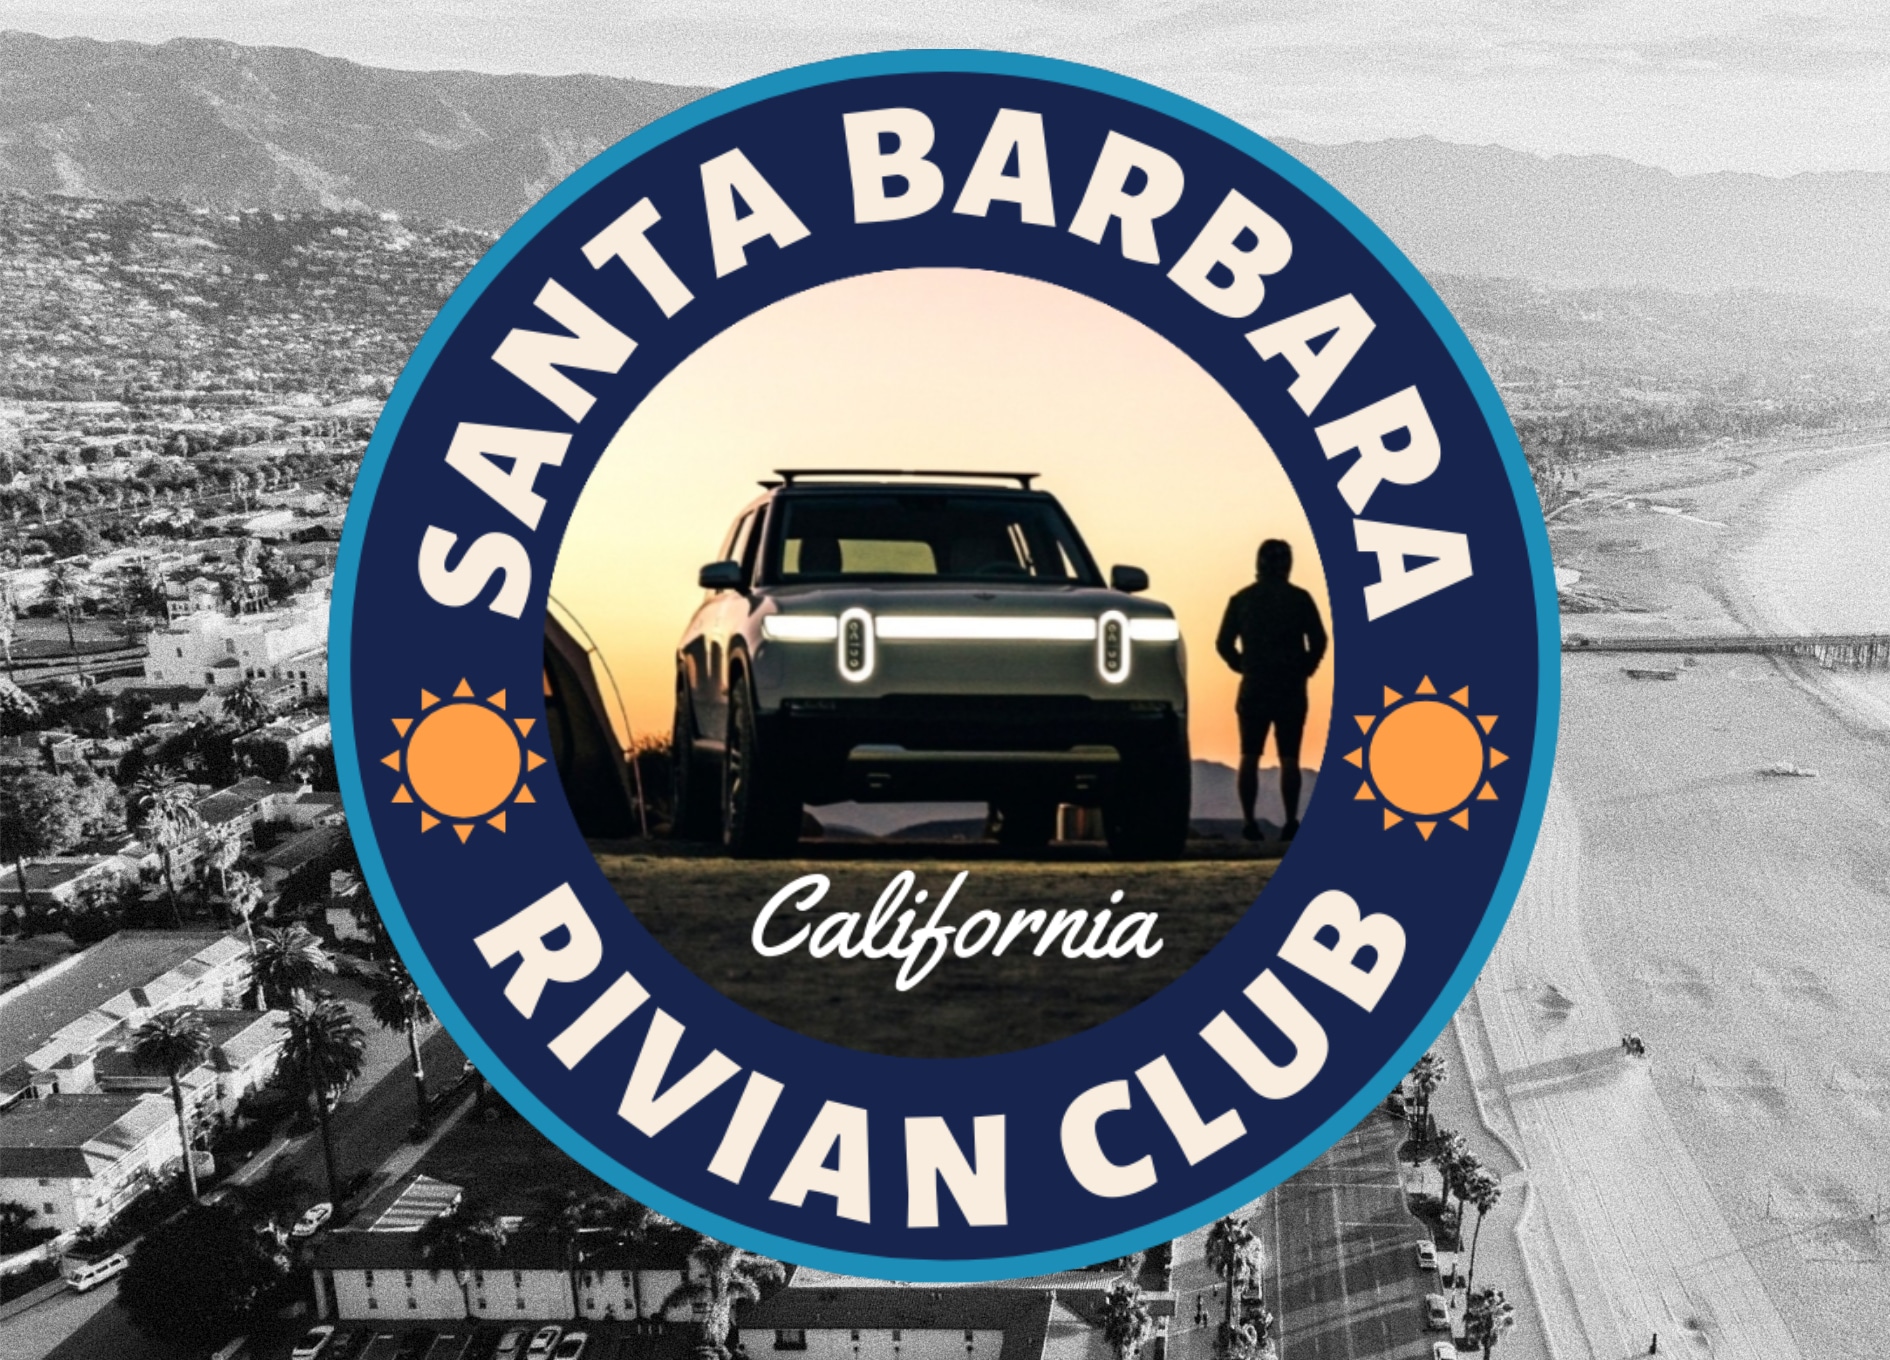 Santa Barbara Rivian Club